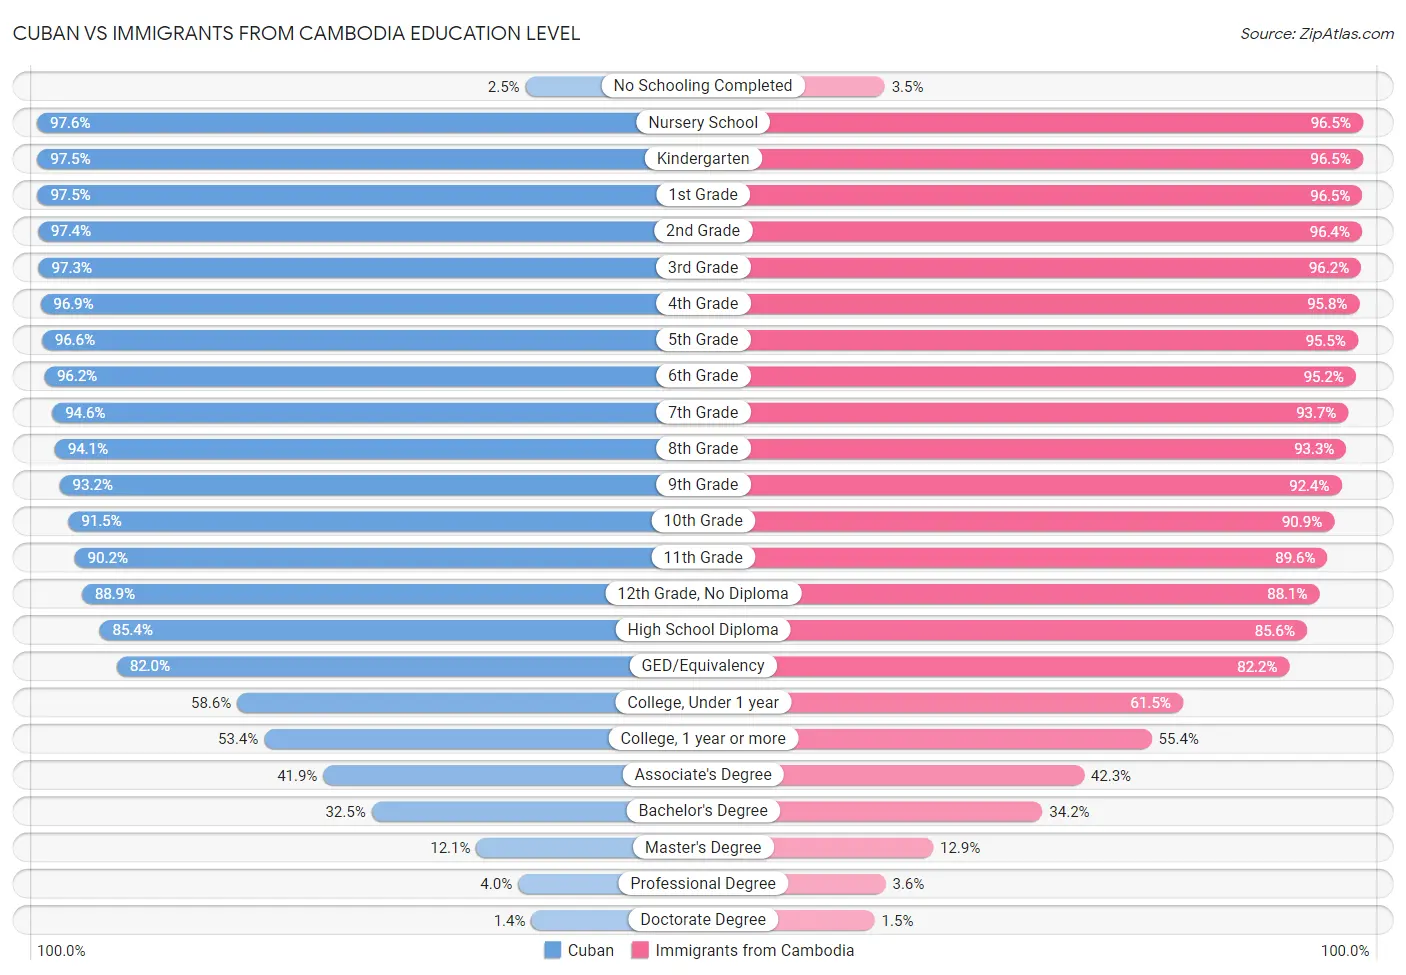 Cuban vs Immigrants from Cambodia Education Level